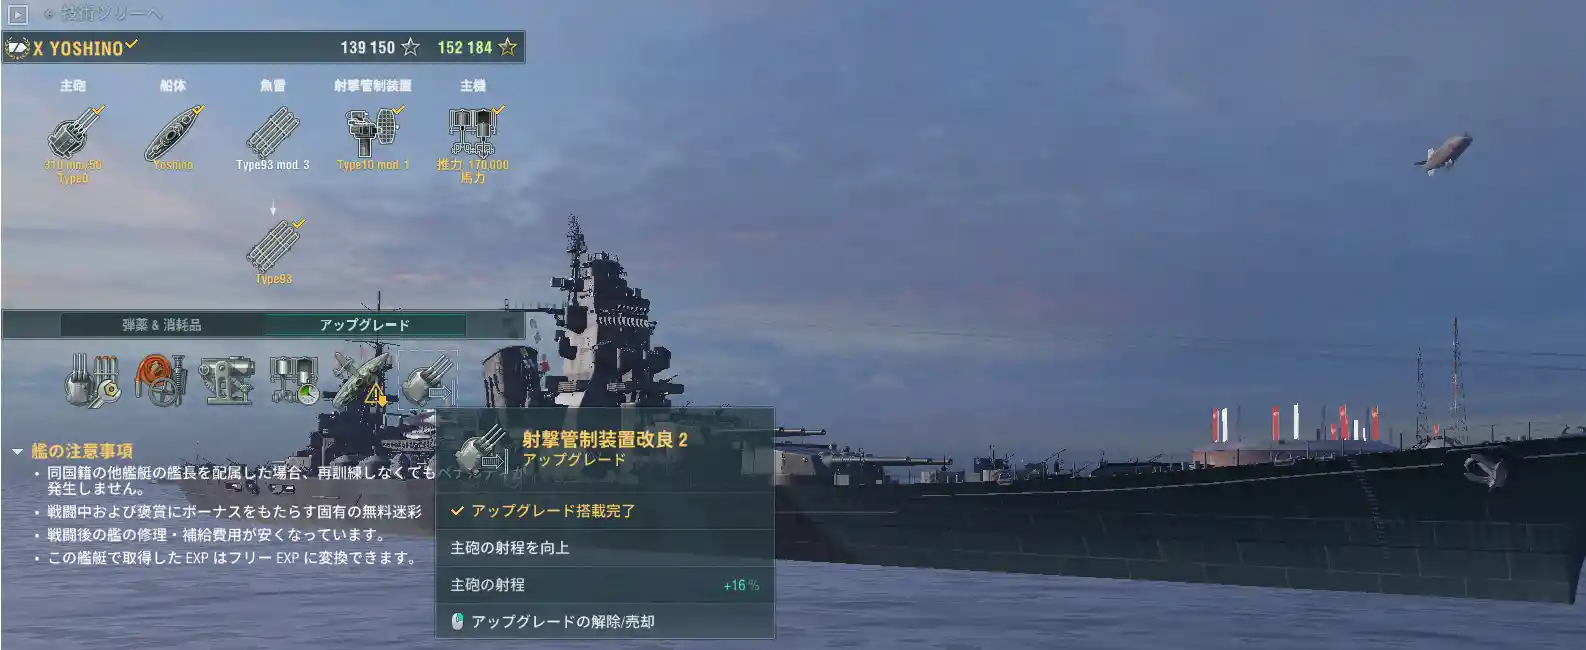 World of Warships 20.03.07 吉野アップグレード内容.jpg